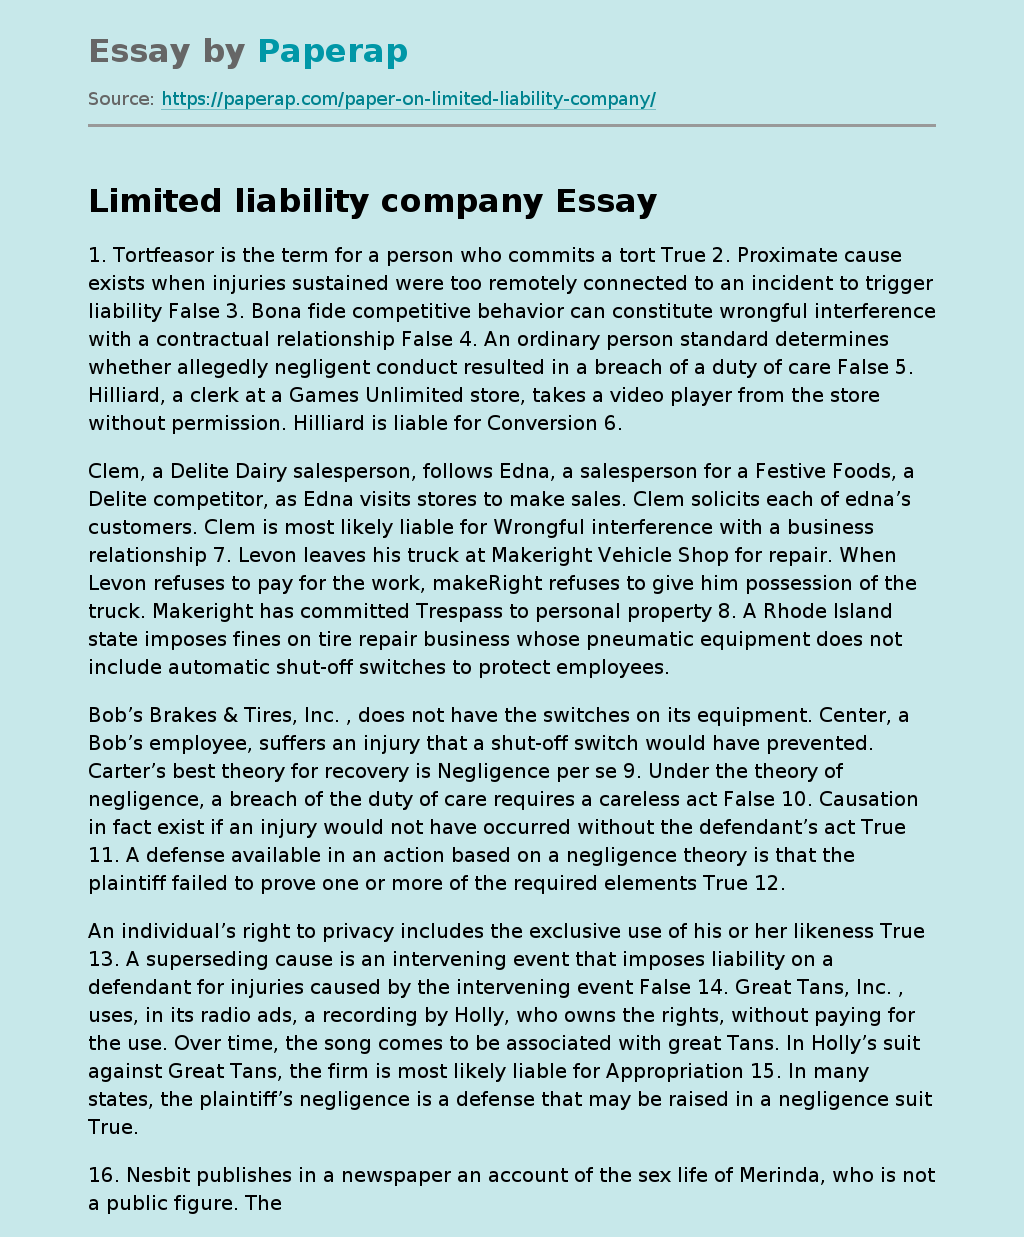 Limited liability company